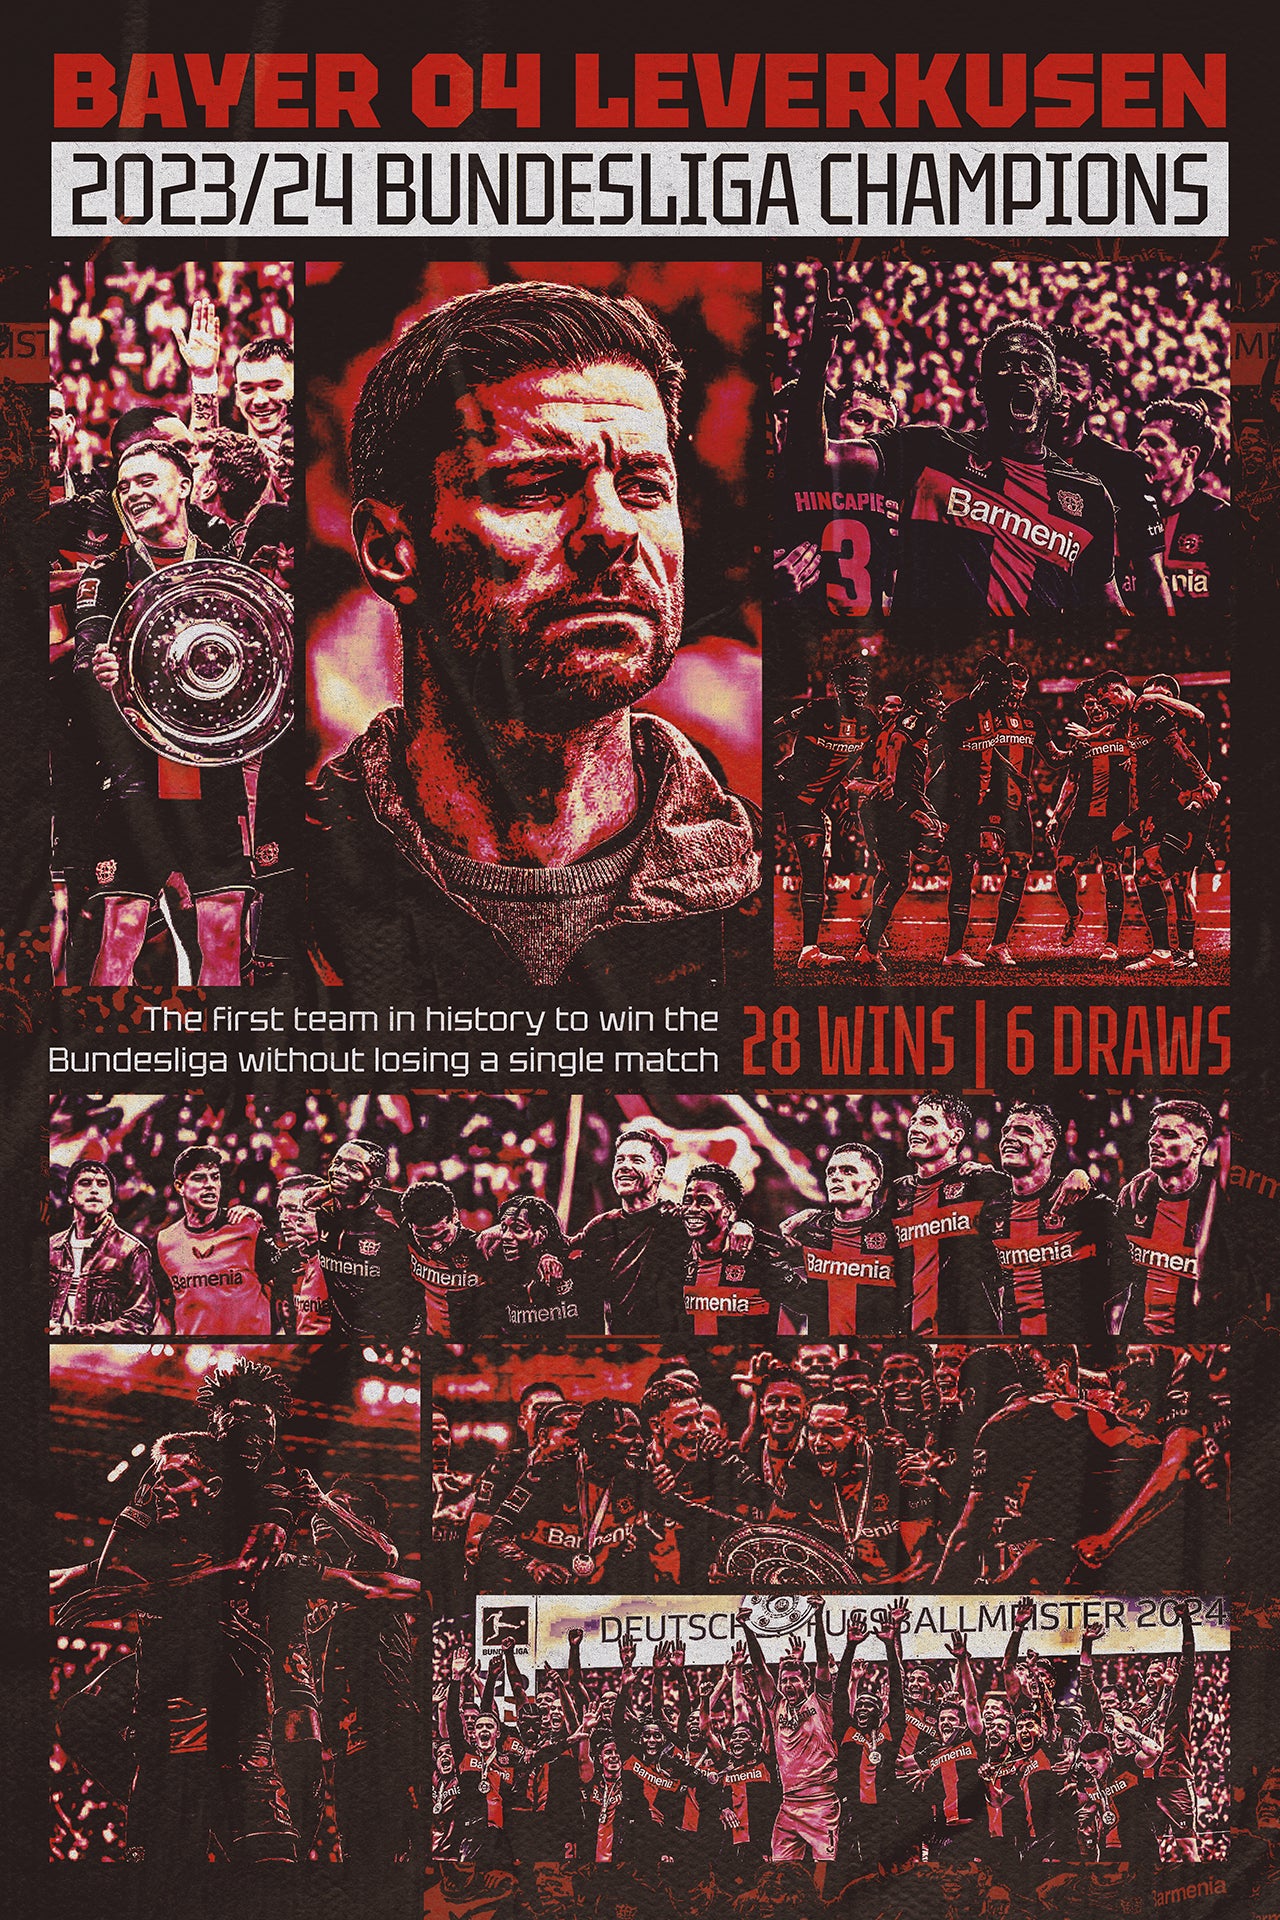 Bayer Leverkusen "The Invincibles" | Historic Poster